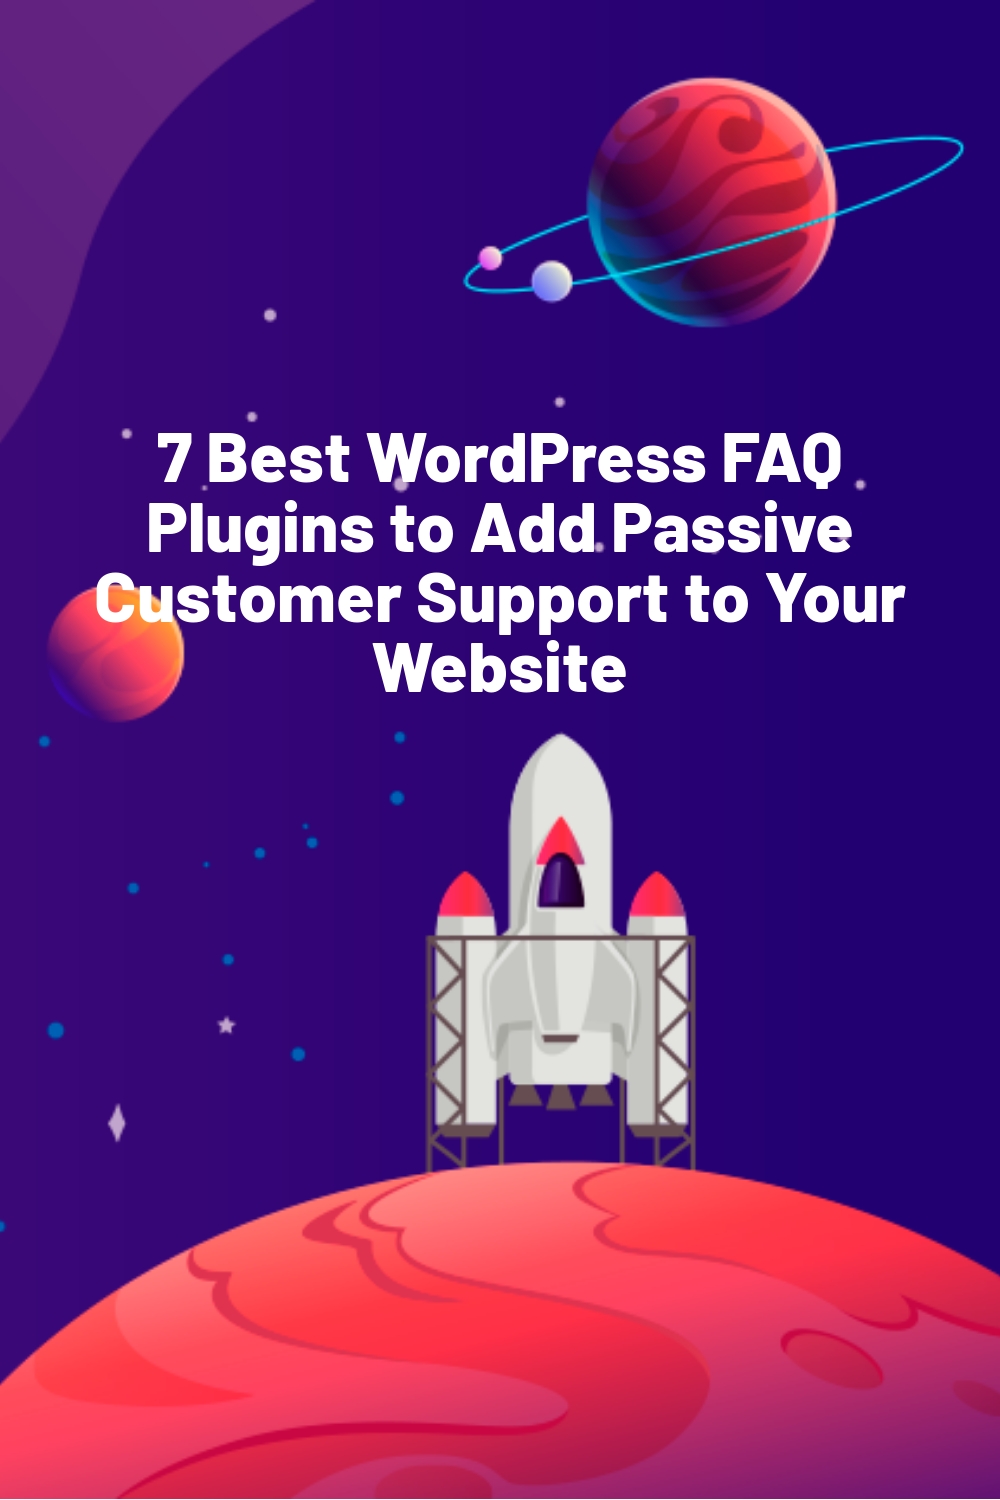 7 Best WordPress FAQ Plugins to Add Passive Customer Support to Your Website